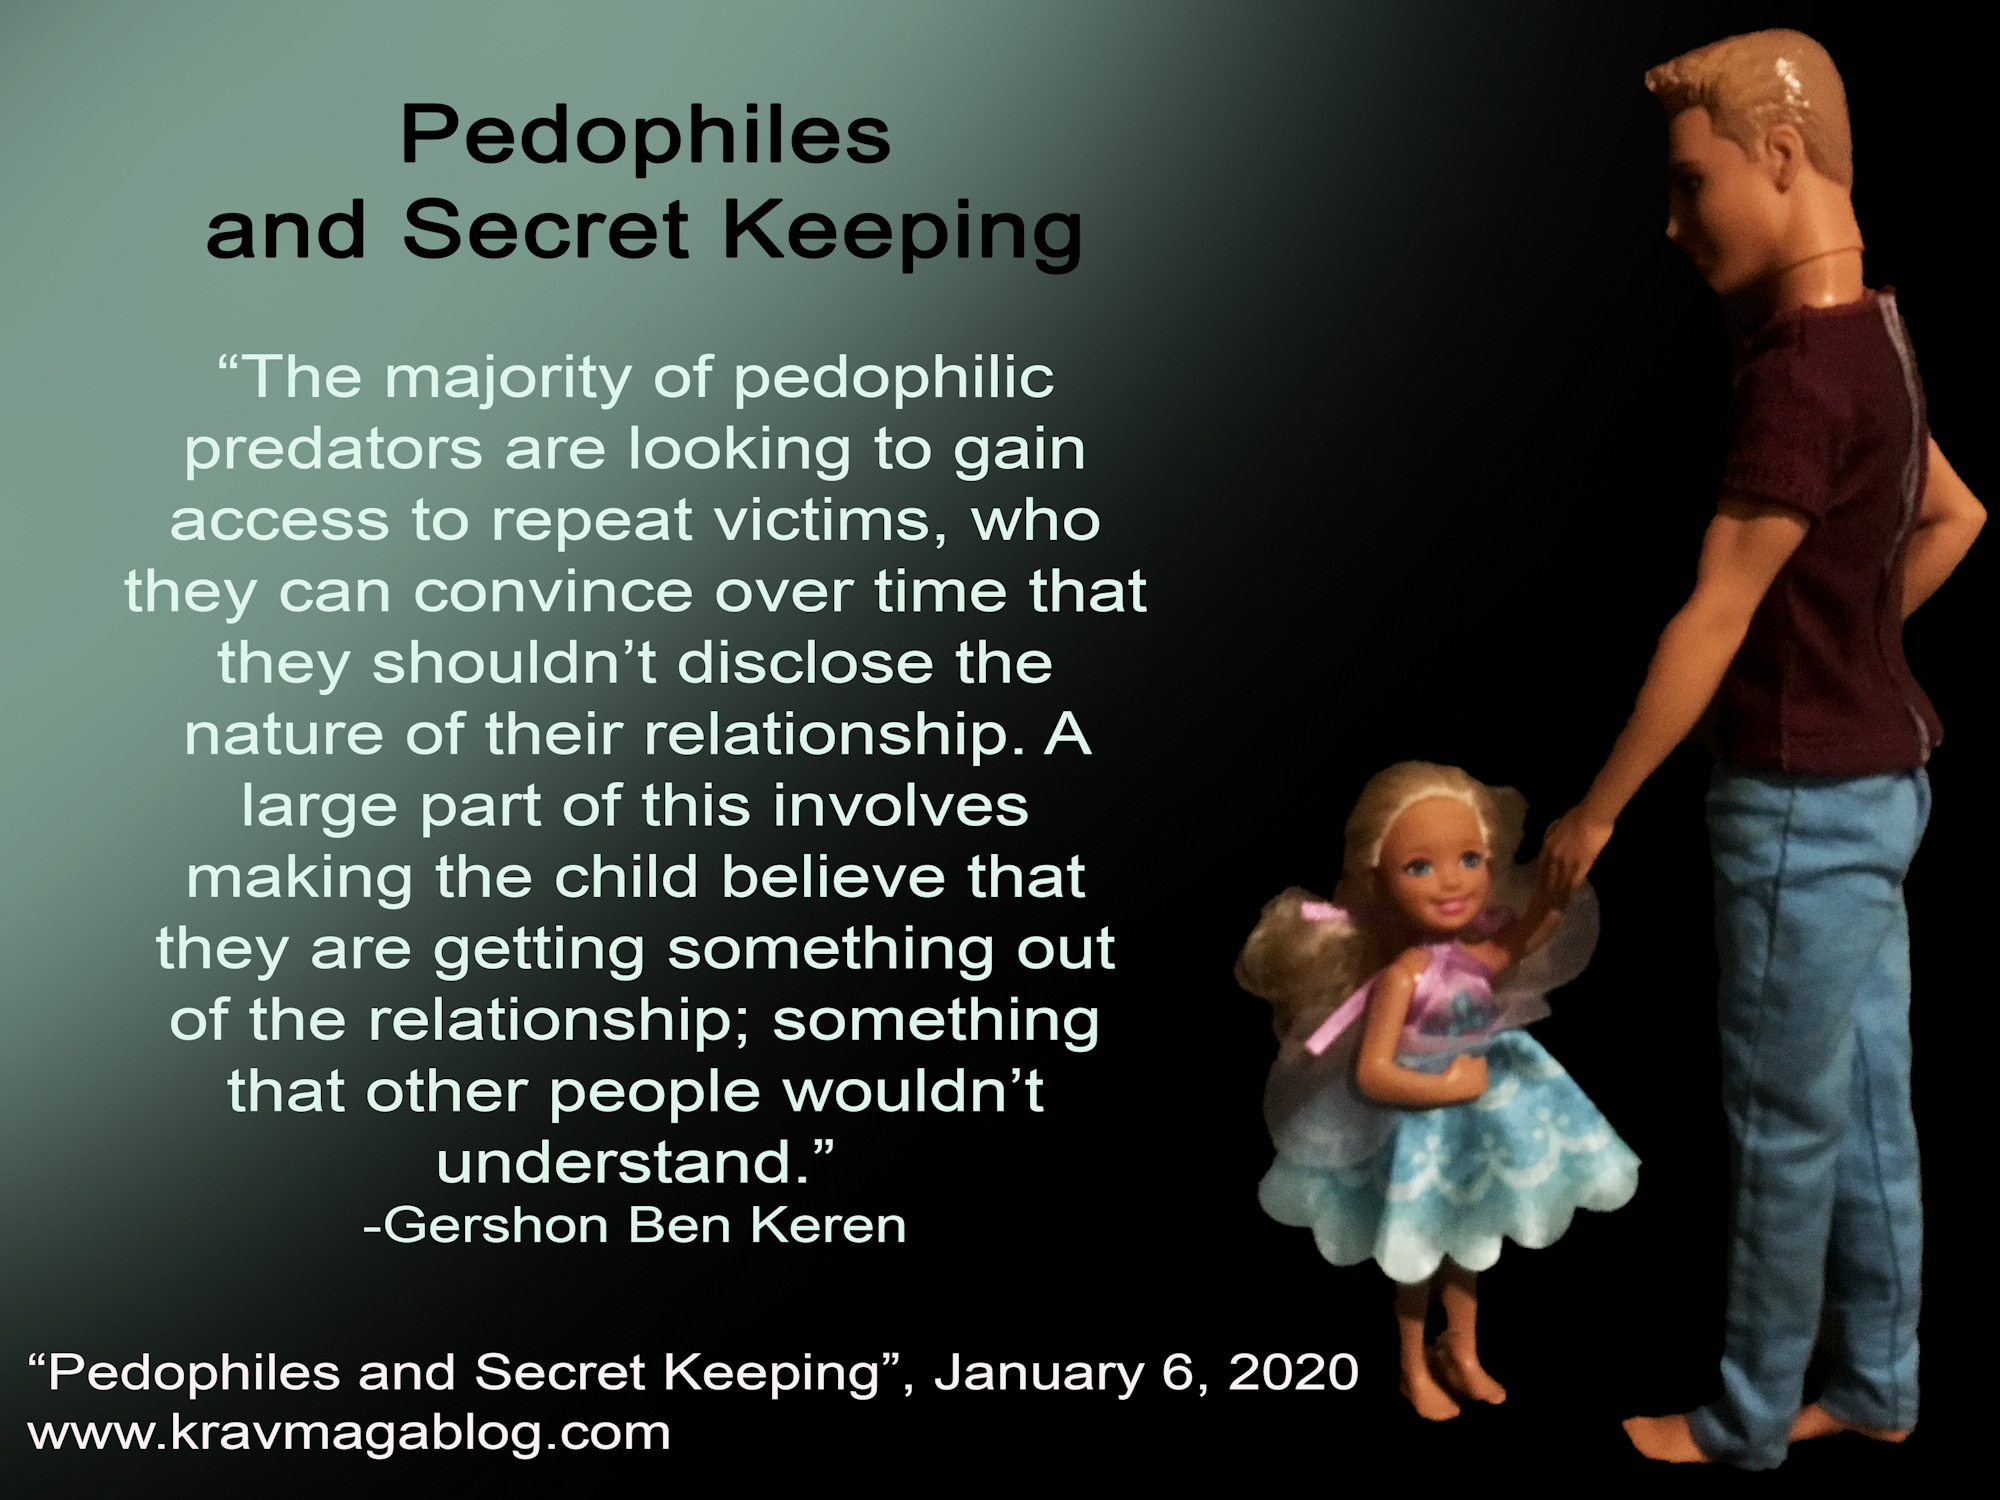 Blog About Pedophiles & Secret Keeping